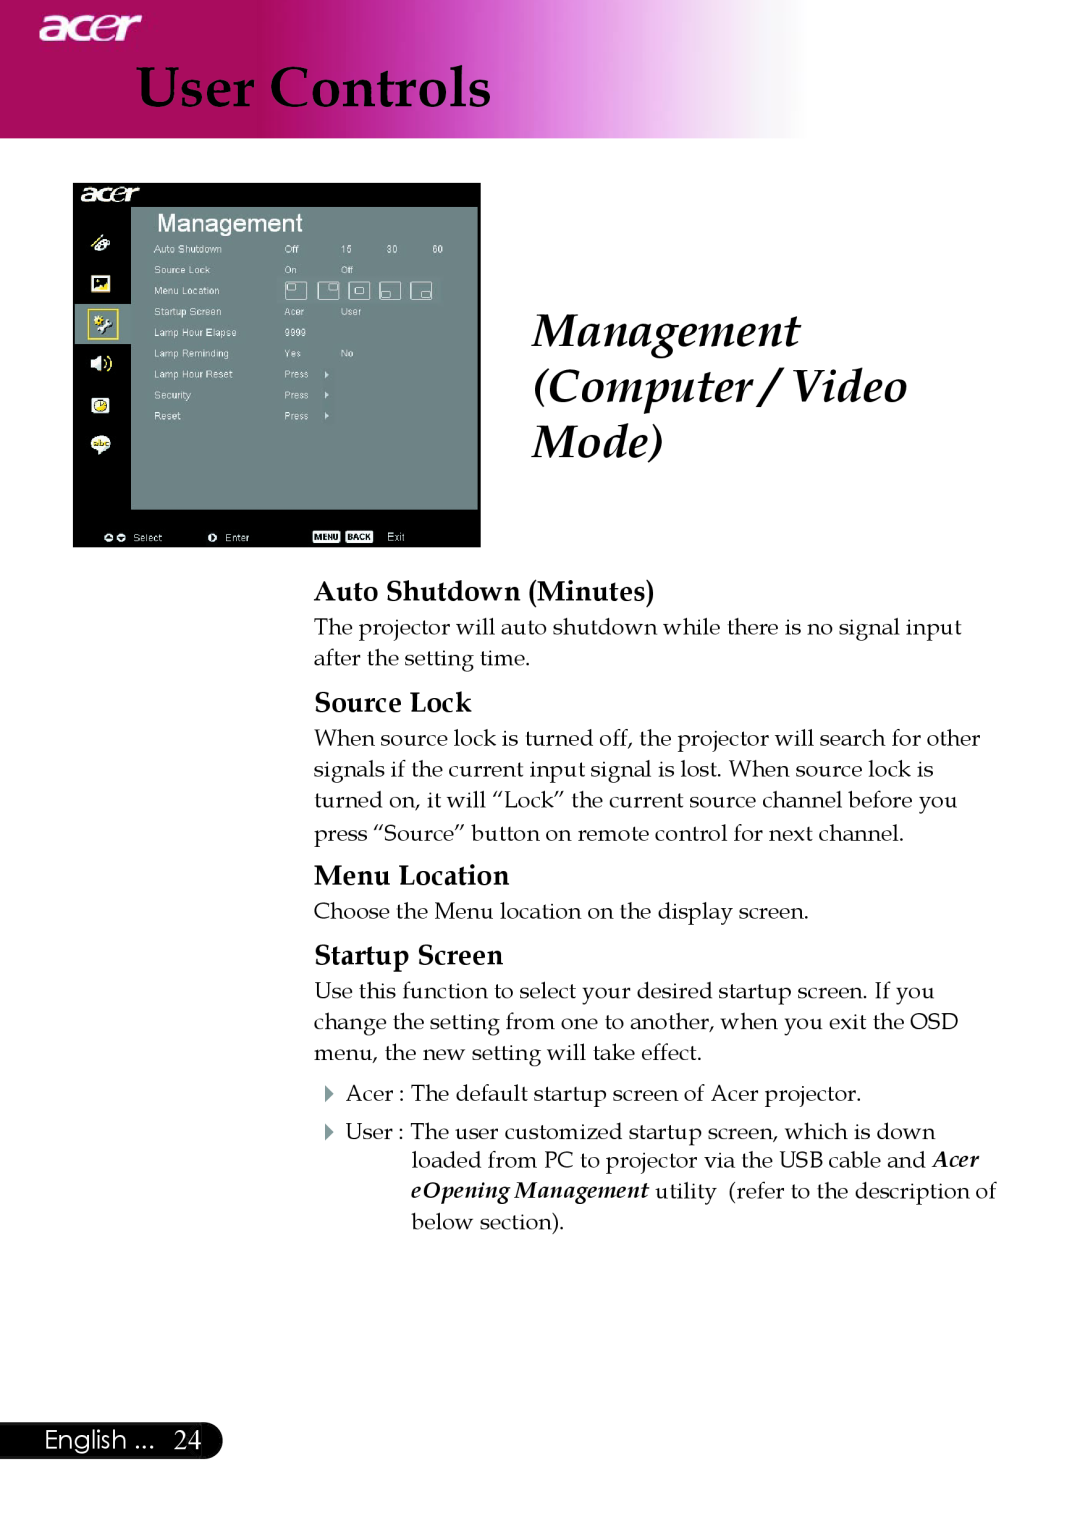 Acer XD1150D Management Computer / Video Mode, Auto Shutdown Minutes, Source Lock, Menu Location, Startup Screen, English 